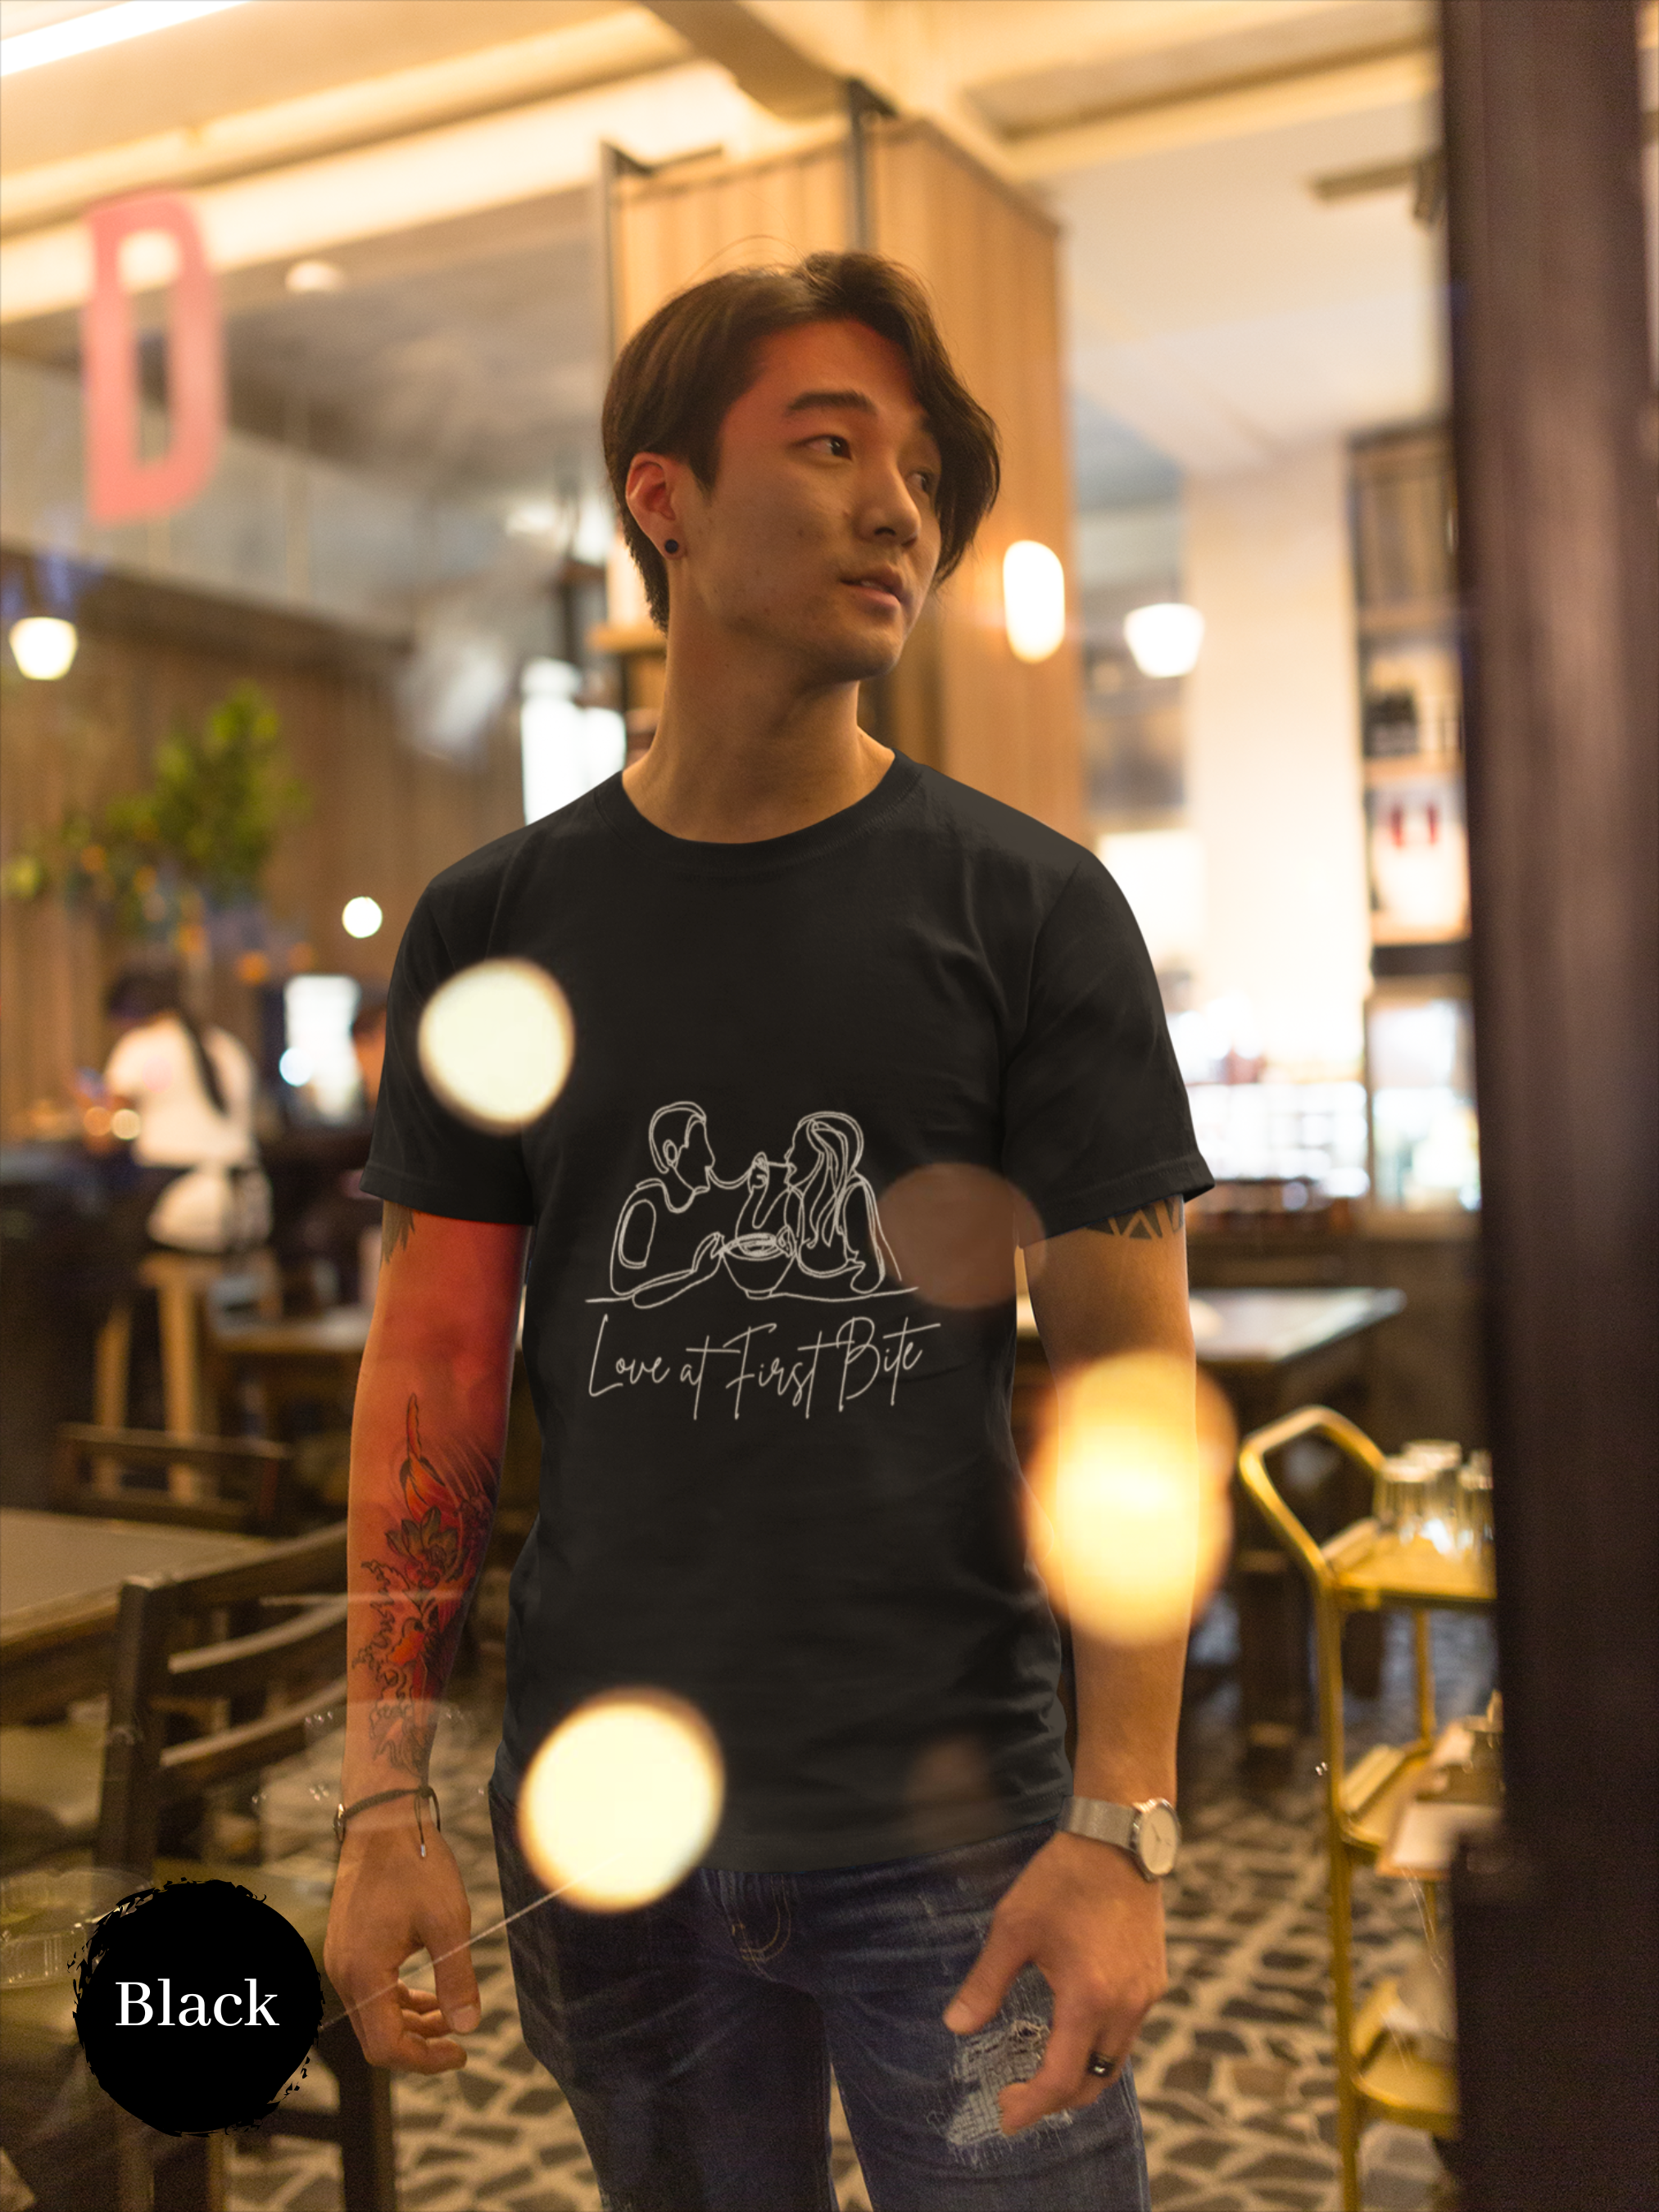 Ramen T-shirt: Japanese Shirt with Foodie Ramen Art Featuring a Couple Together